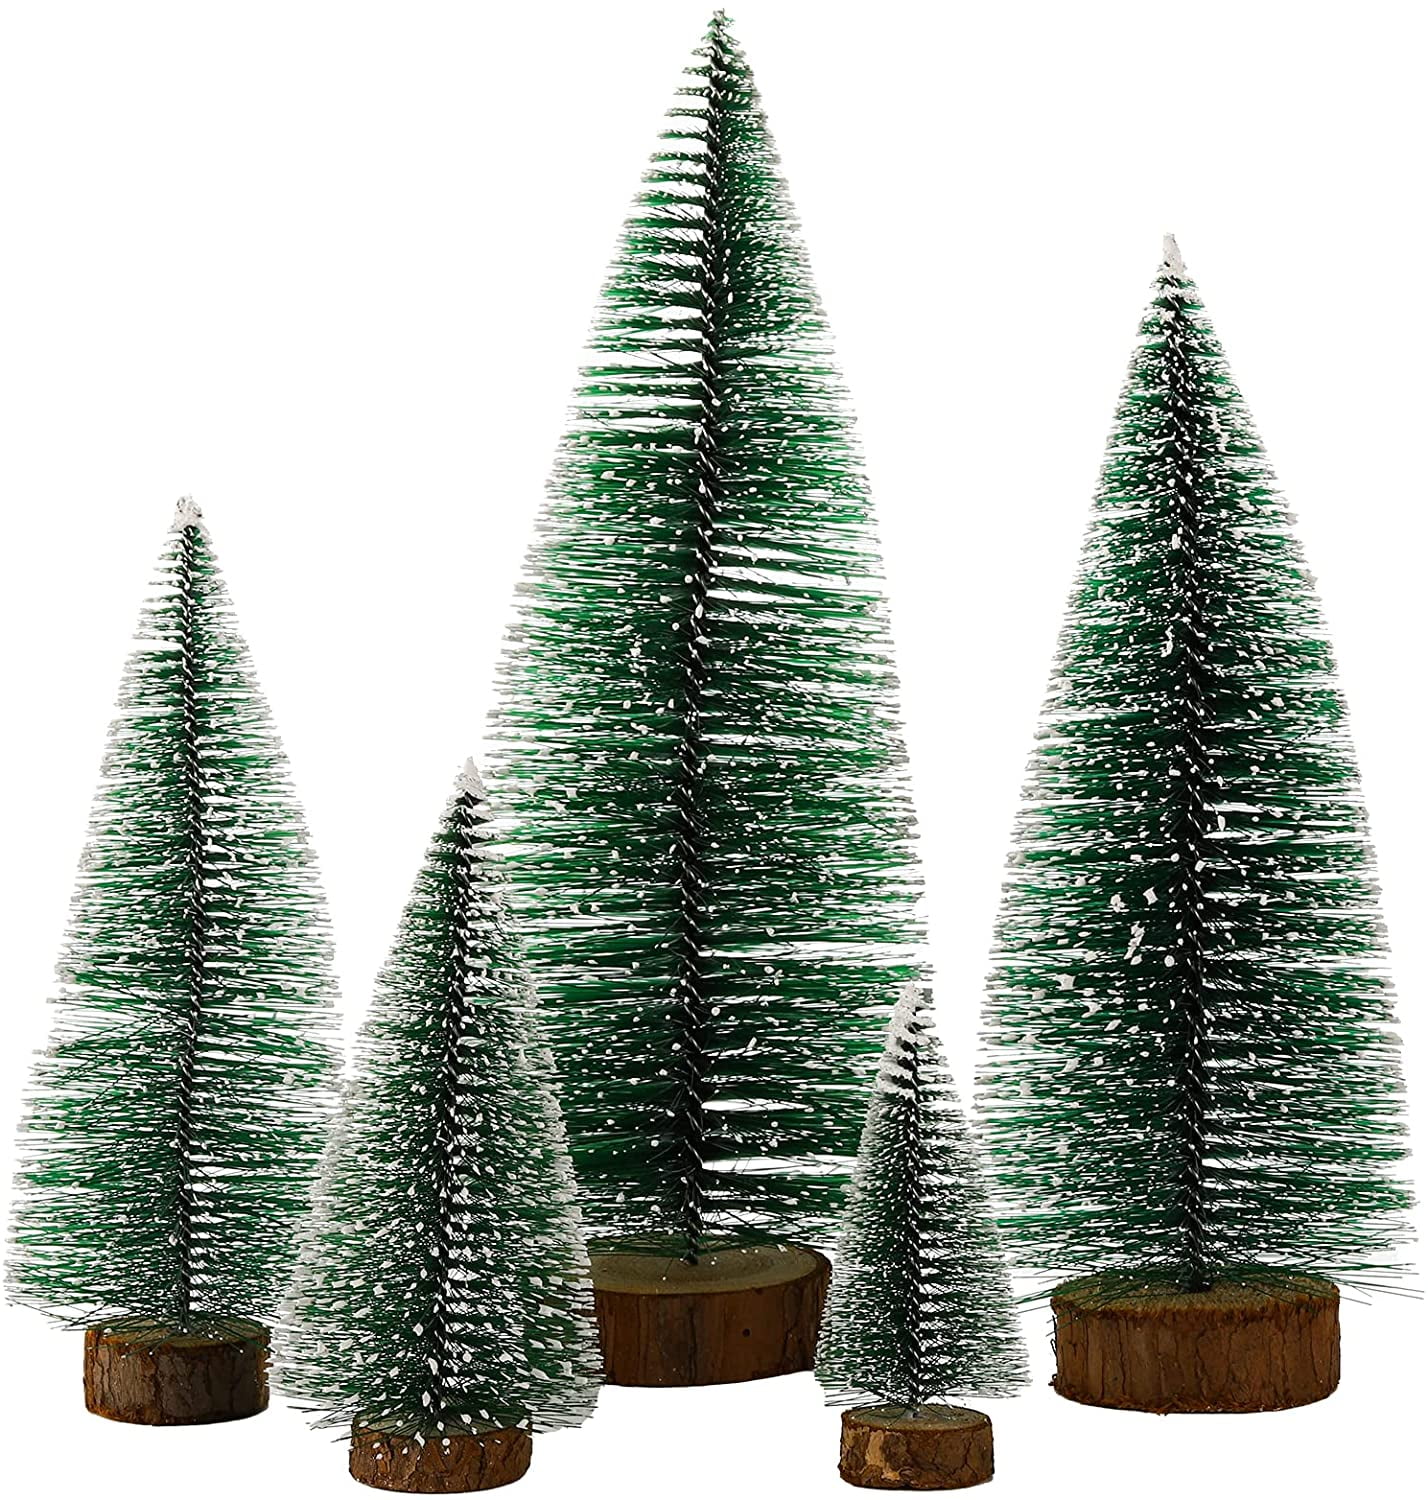 5 PACK Christmas Mini Tree Artificial Green Pine Cedar Home Table Xmas Decor USA 